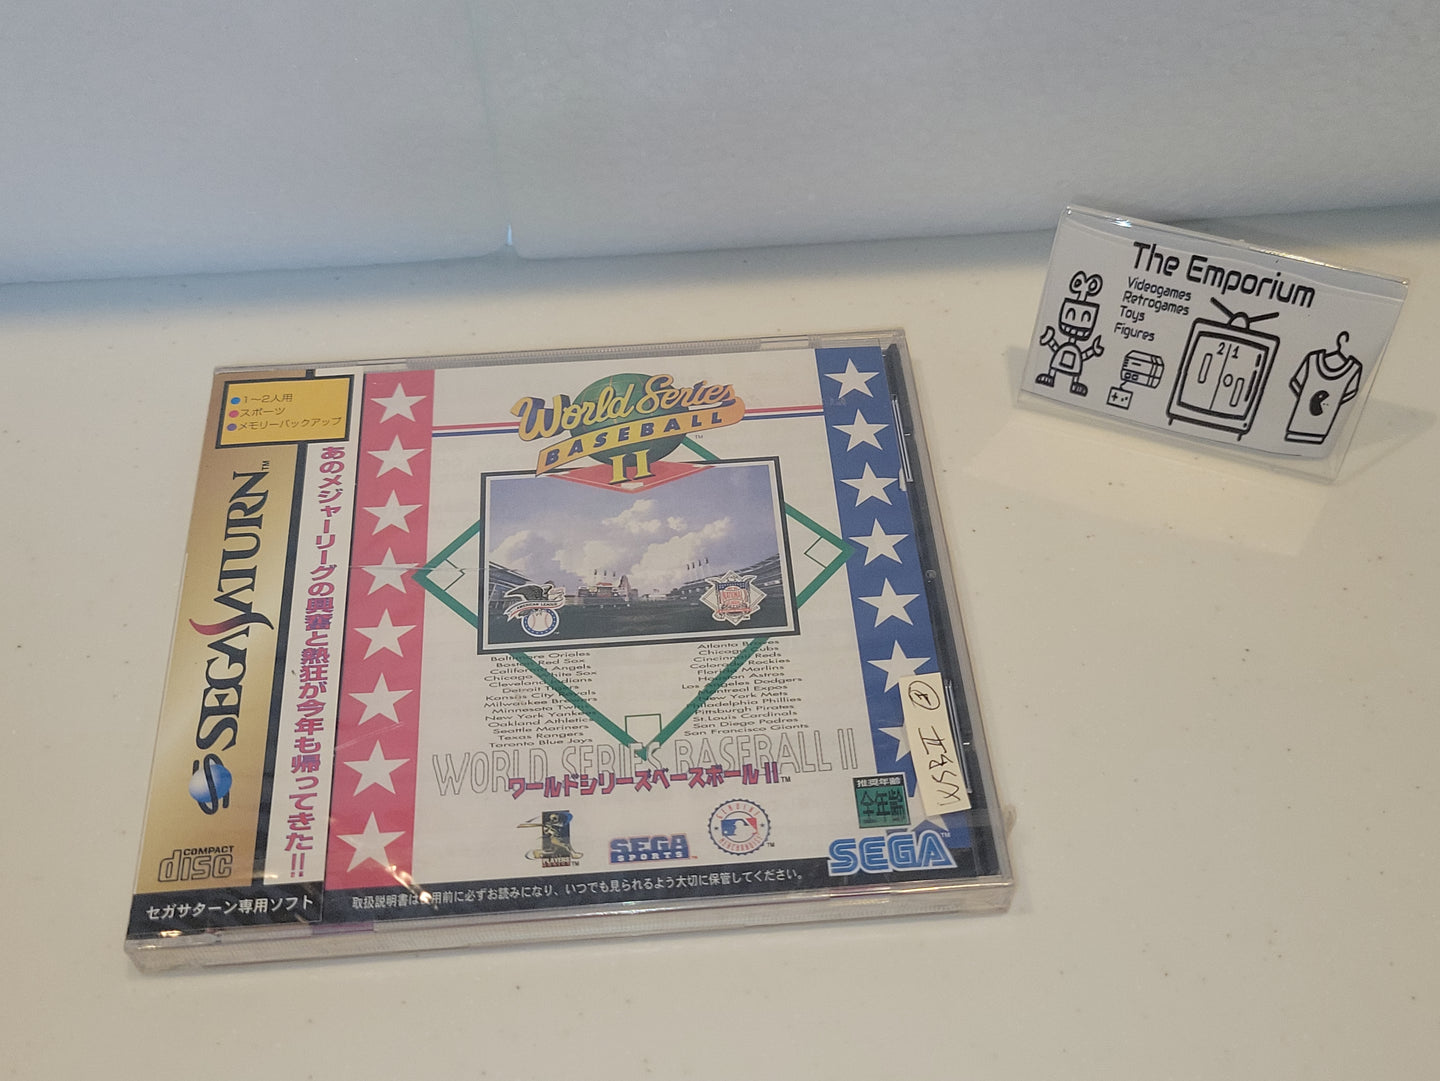 world series baseball II - Sega Saturn sat stn